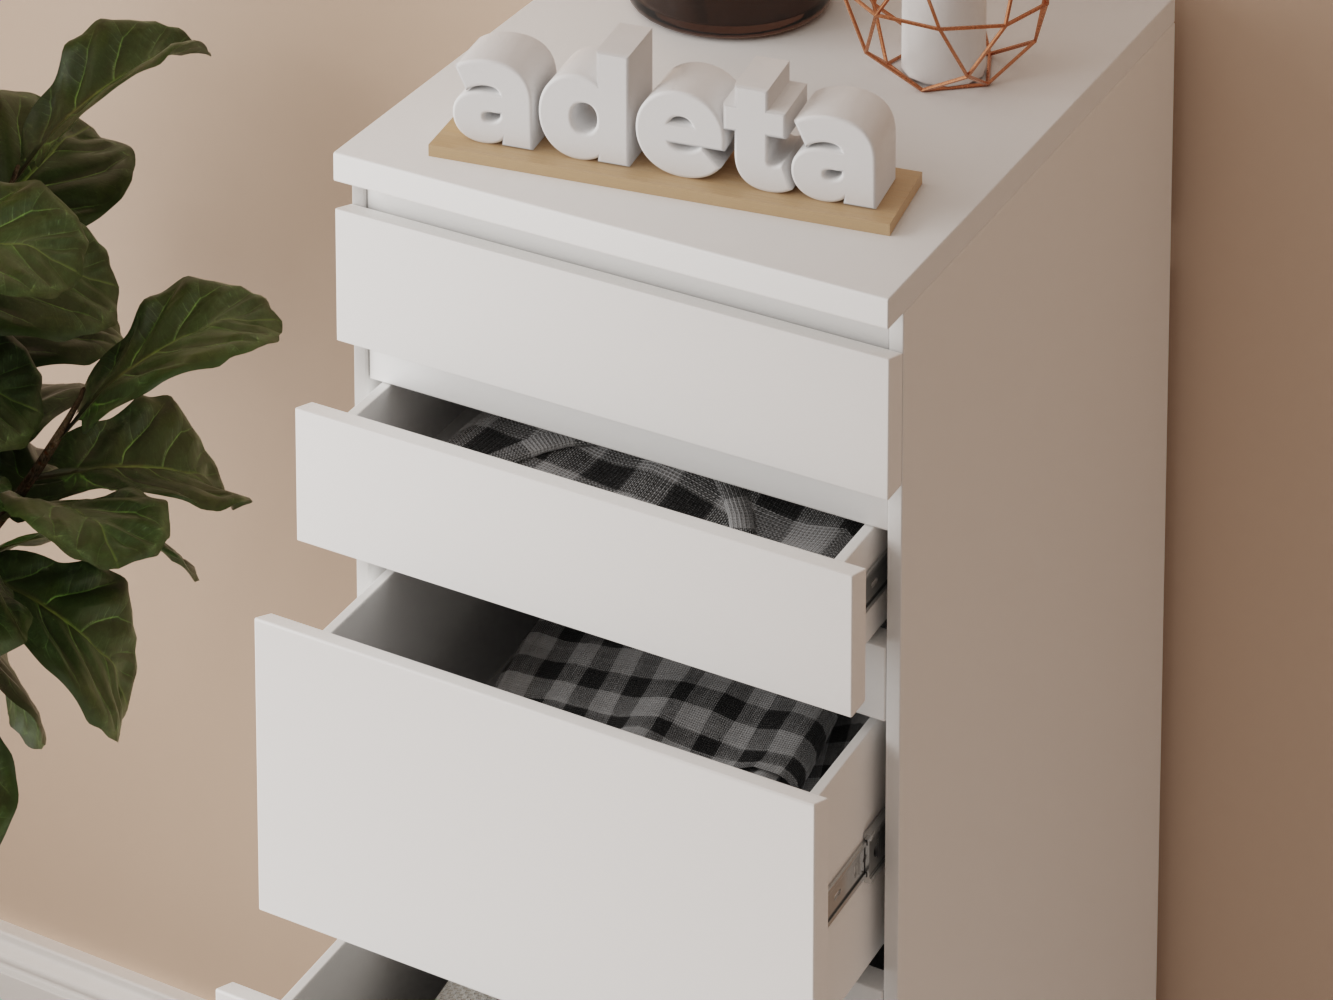 Изображение товара Комод Мальм 28 white ИКЕА (IKEA), 40x48x123 см на сайте adeta.ru